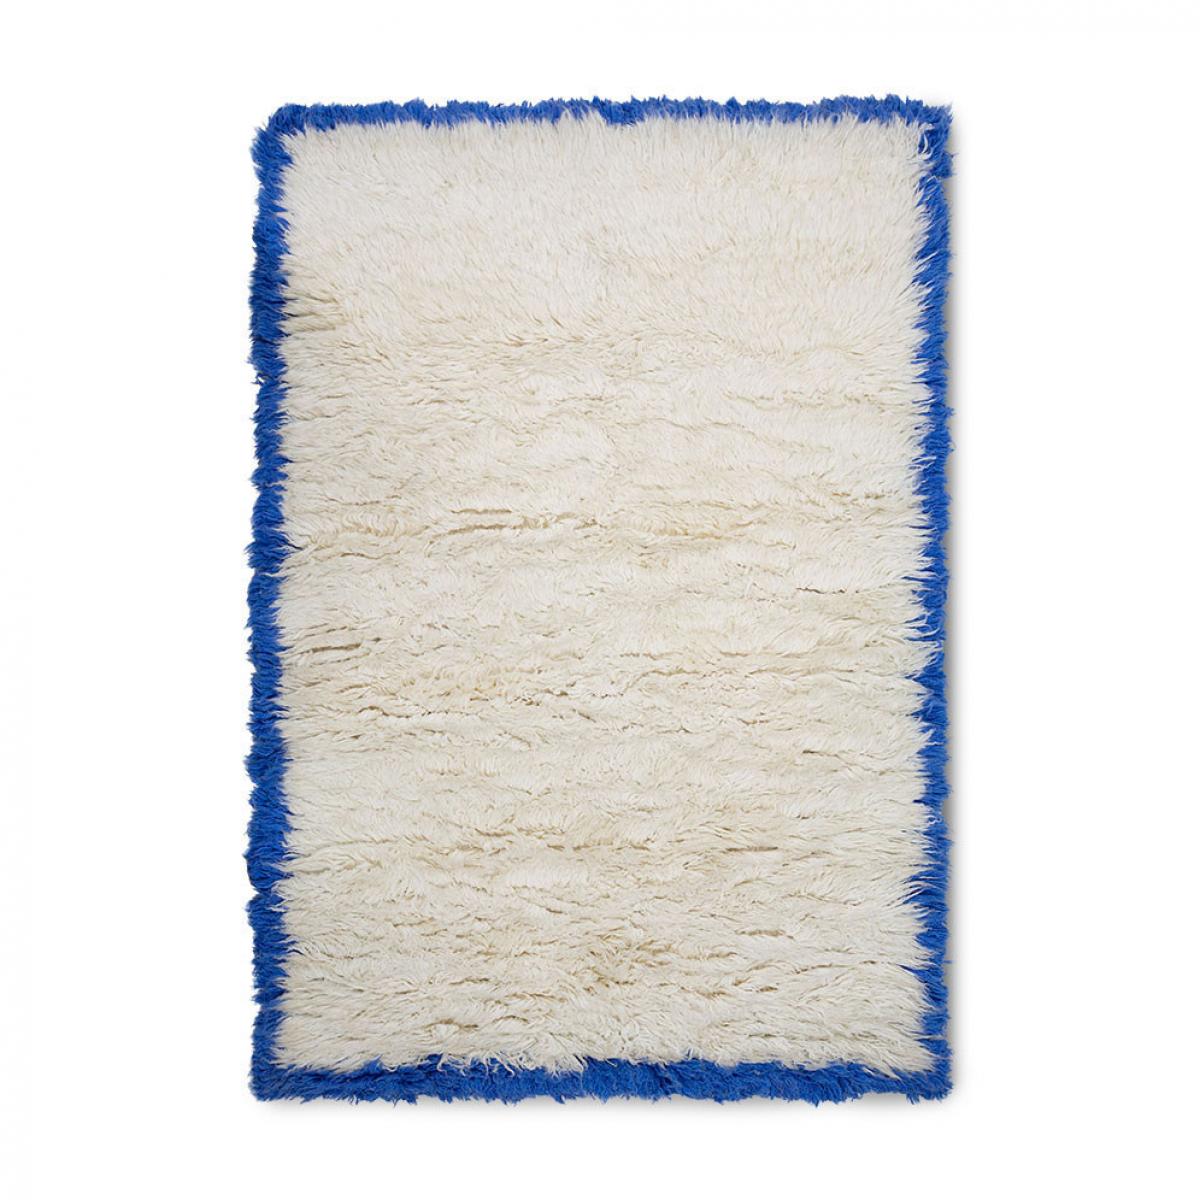 Fluffy tapijt met blauwe rand